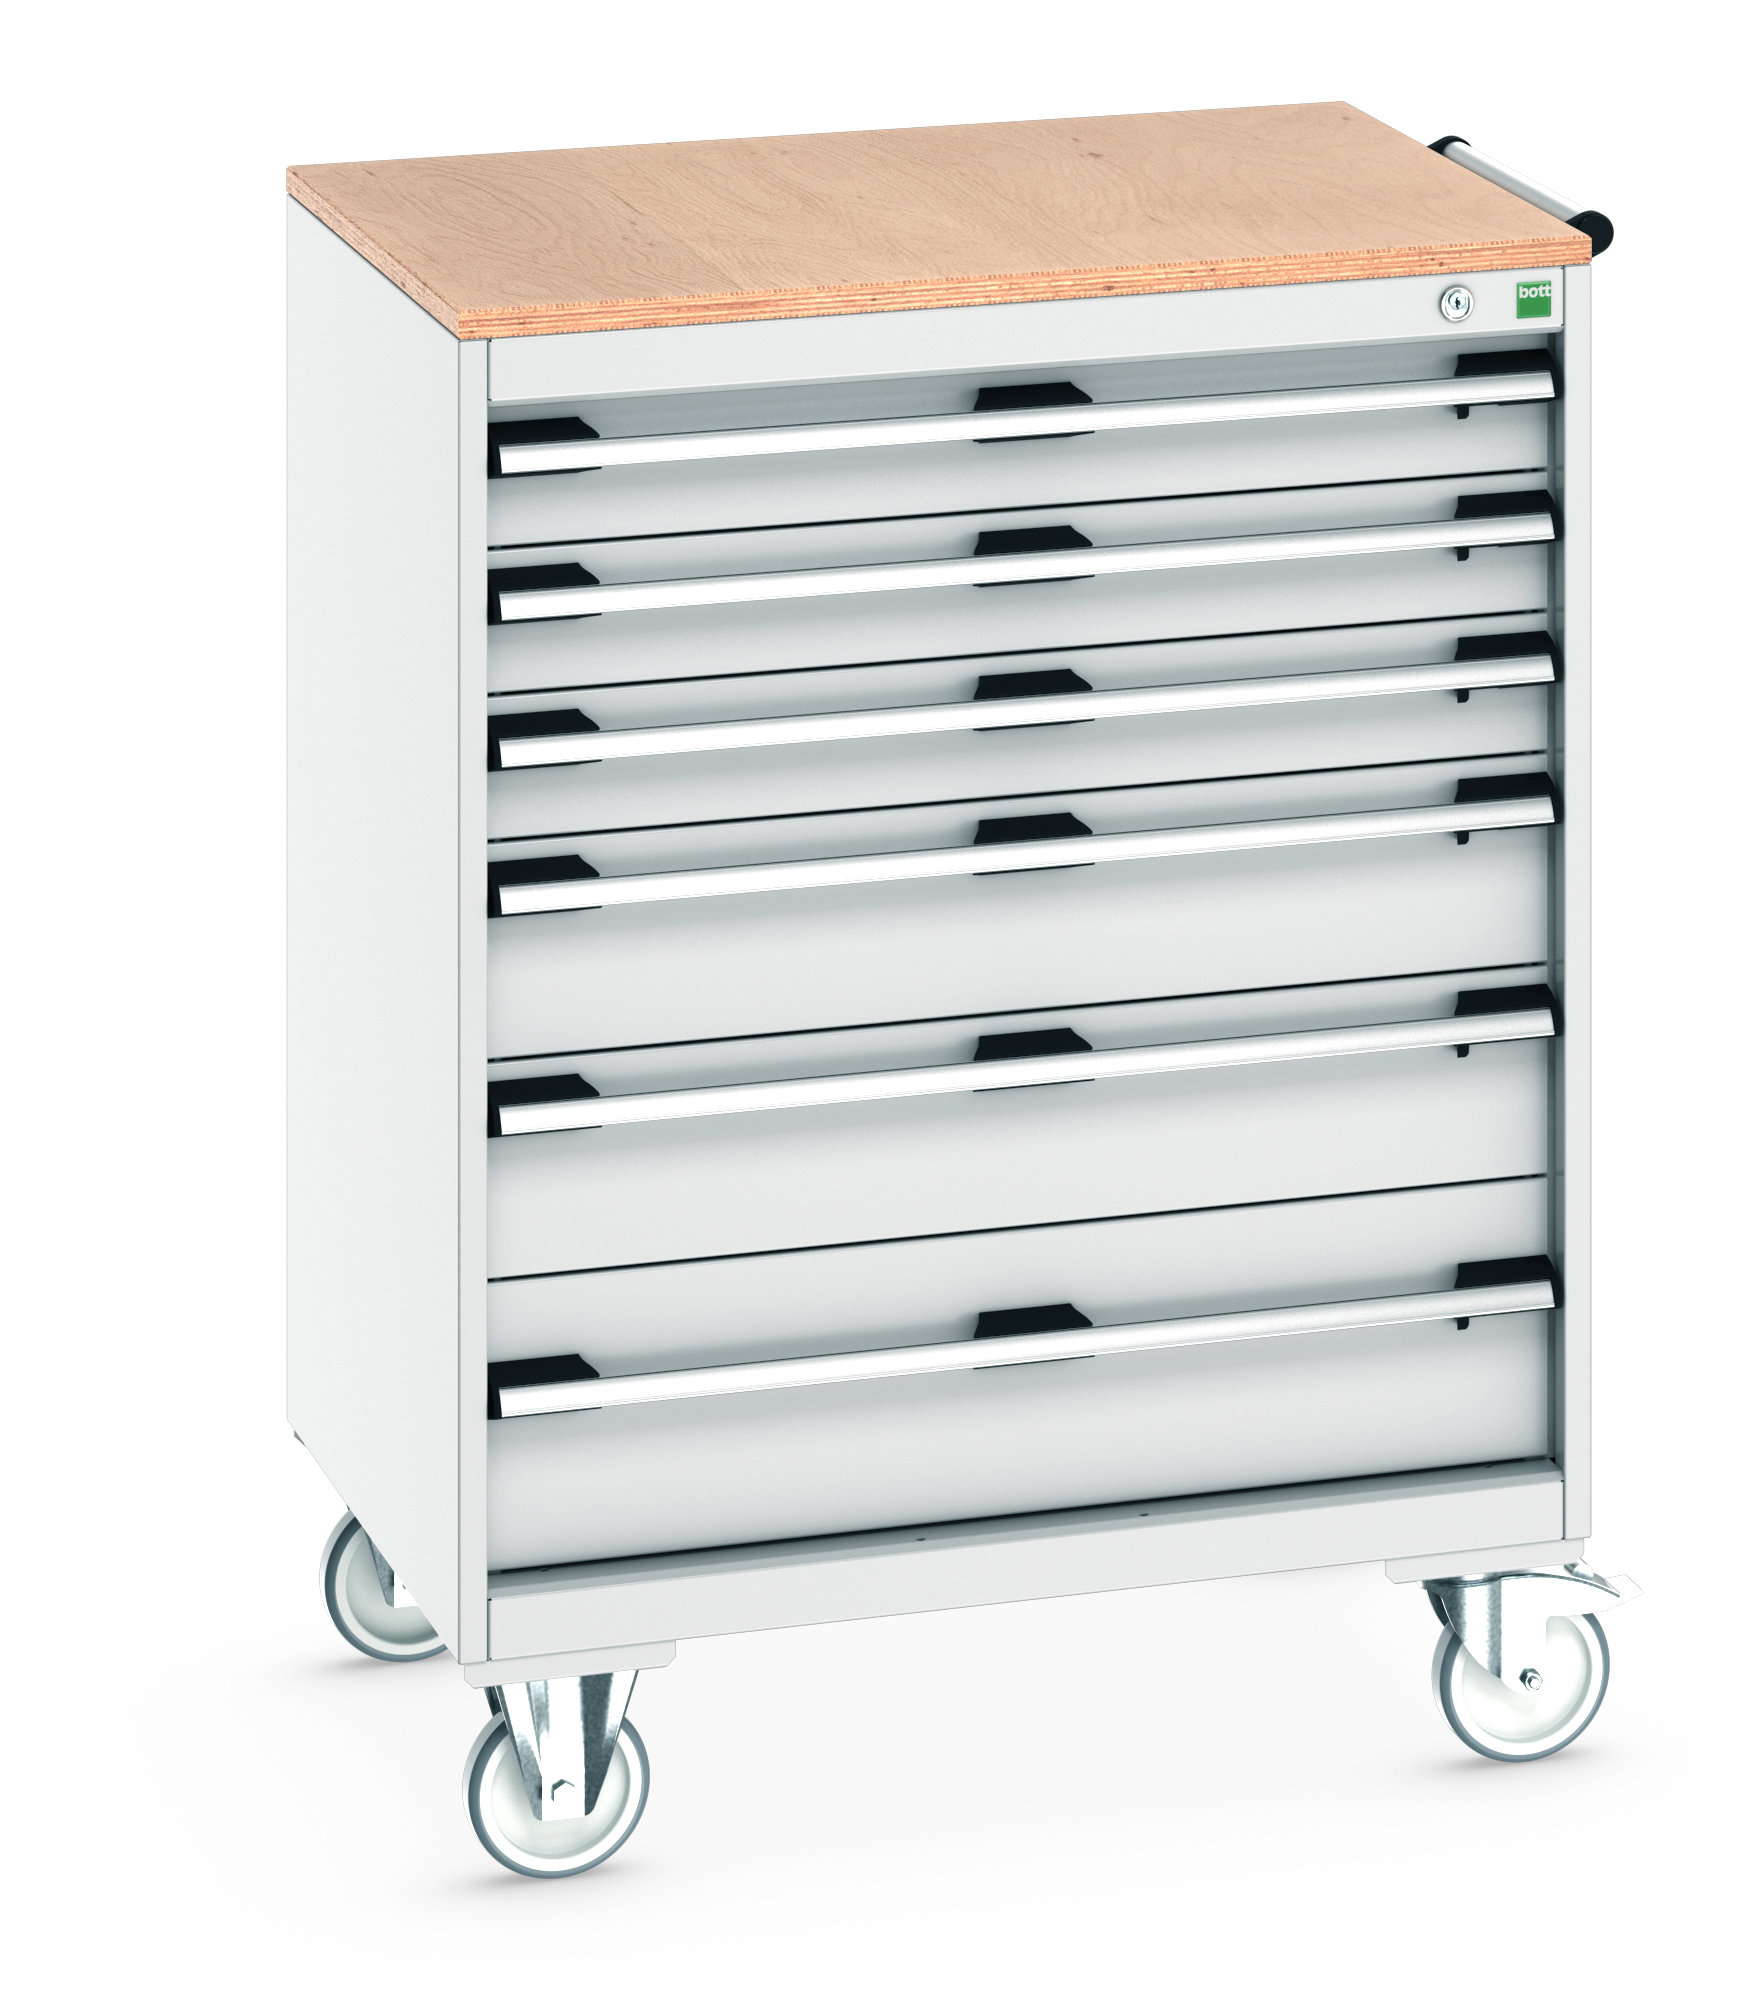 Bott Cubio Mobile Drawer Cabinet With 6 Drawers & Multiplex Worktop - 40402159.16V